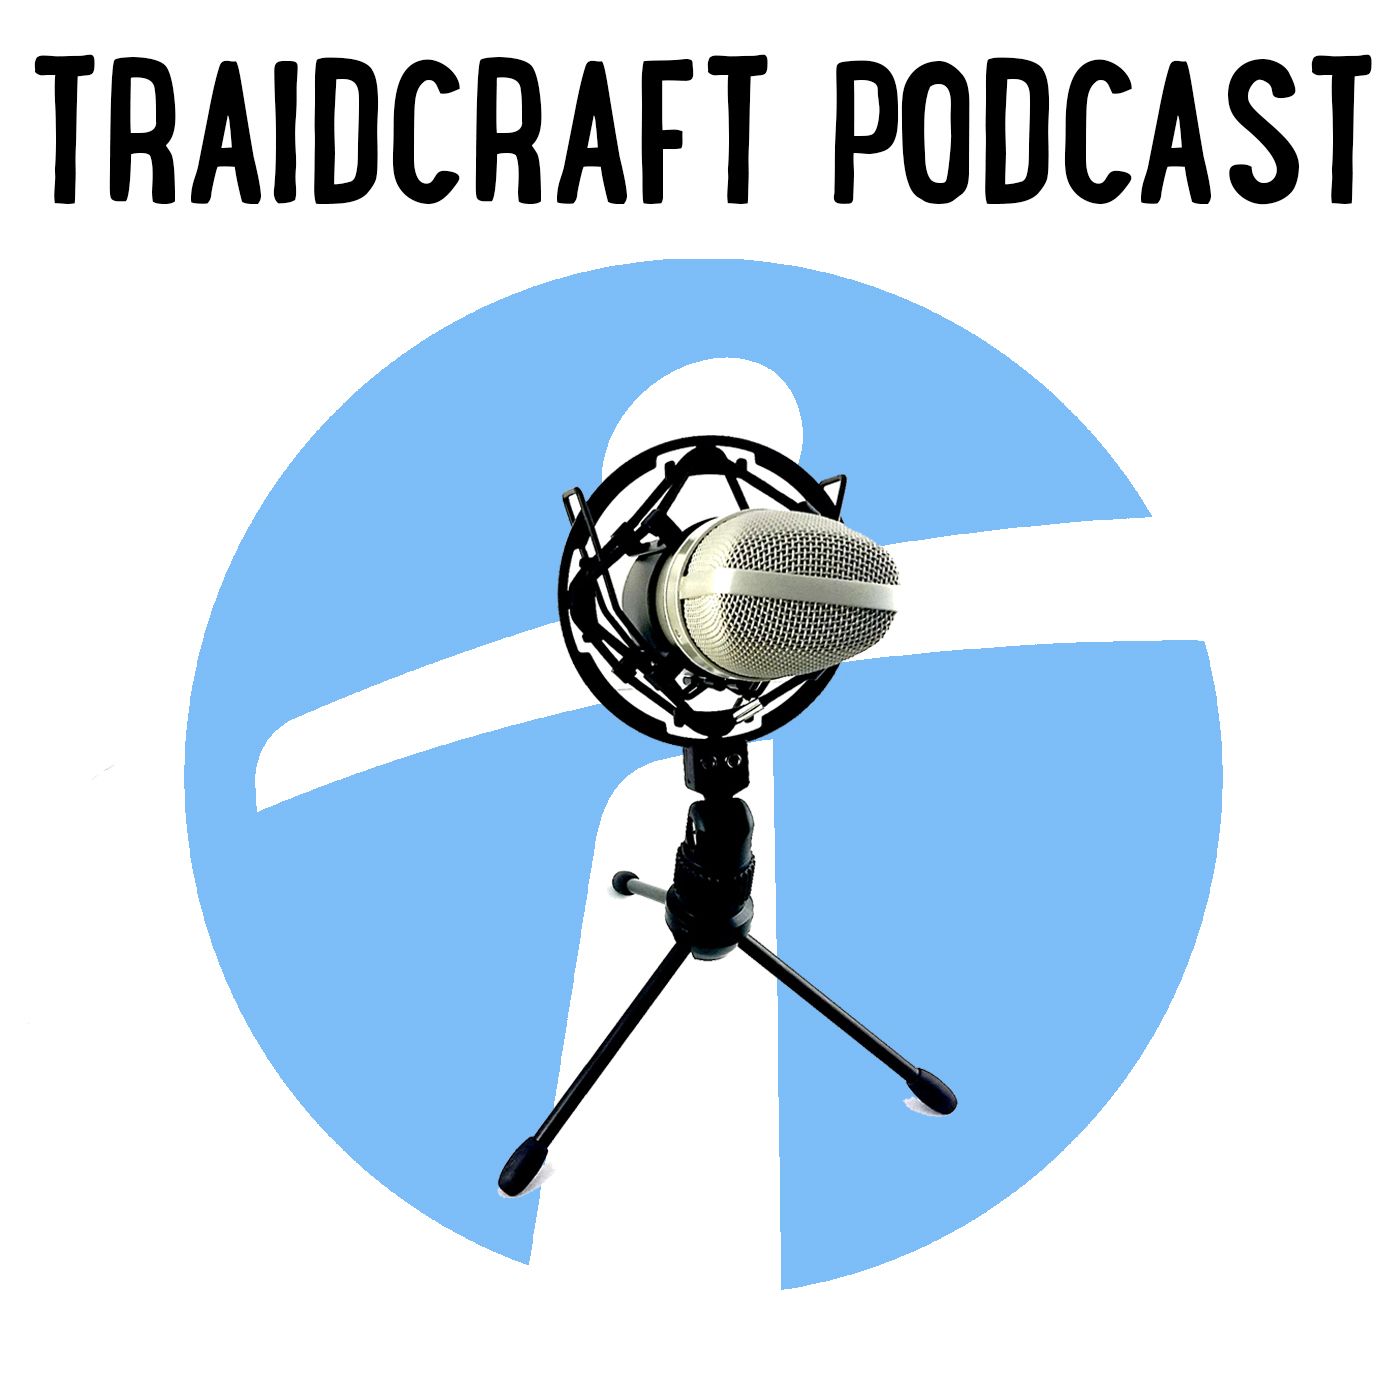 The Traidcraft Podcast